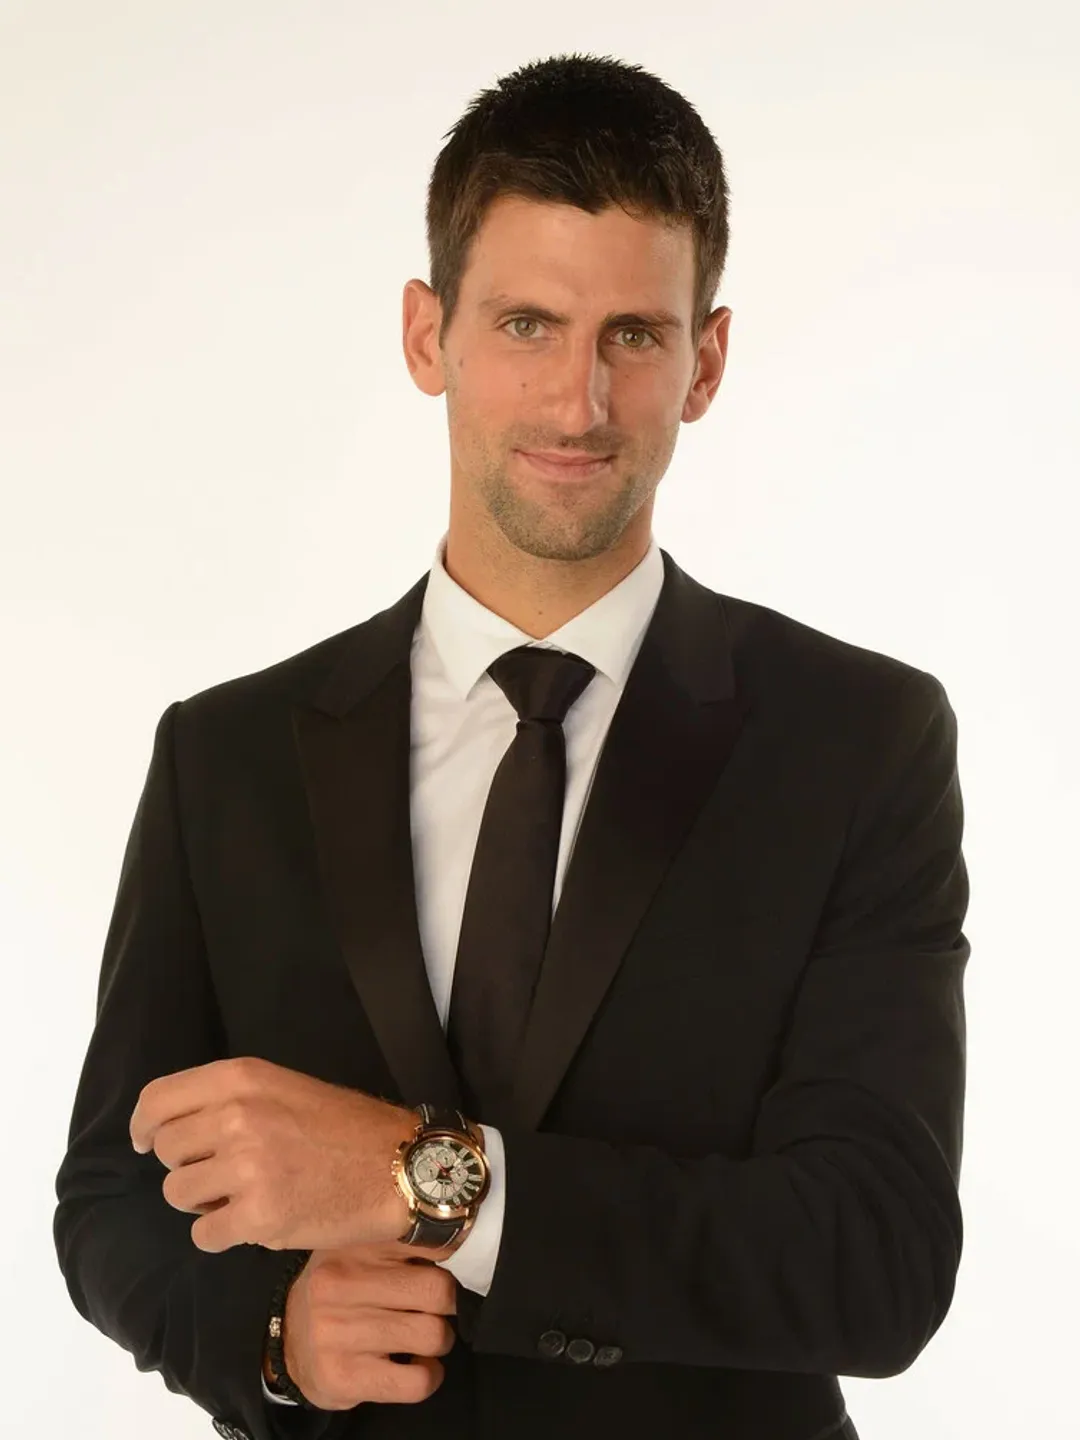 Novak Djokovic who is his mother